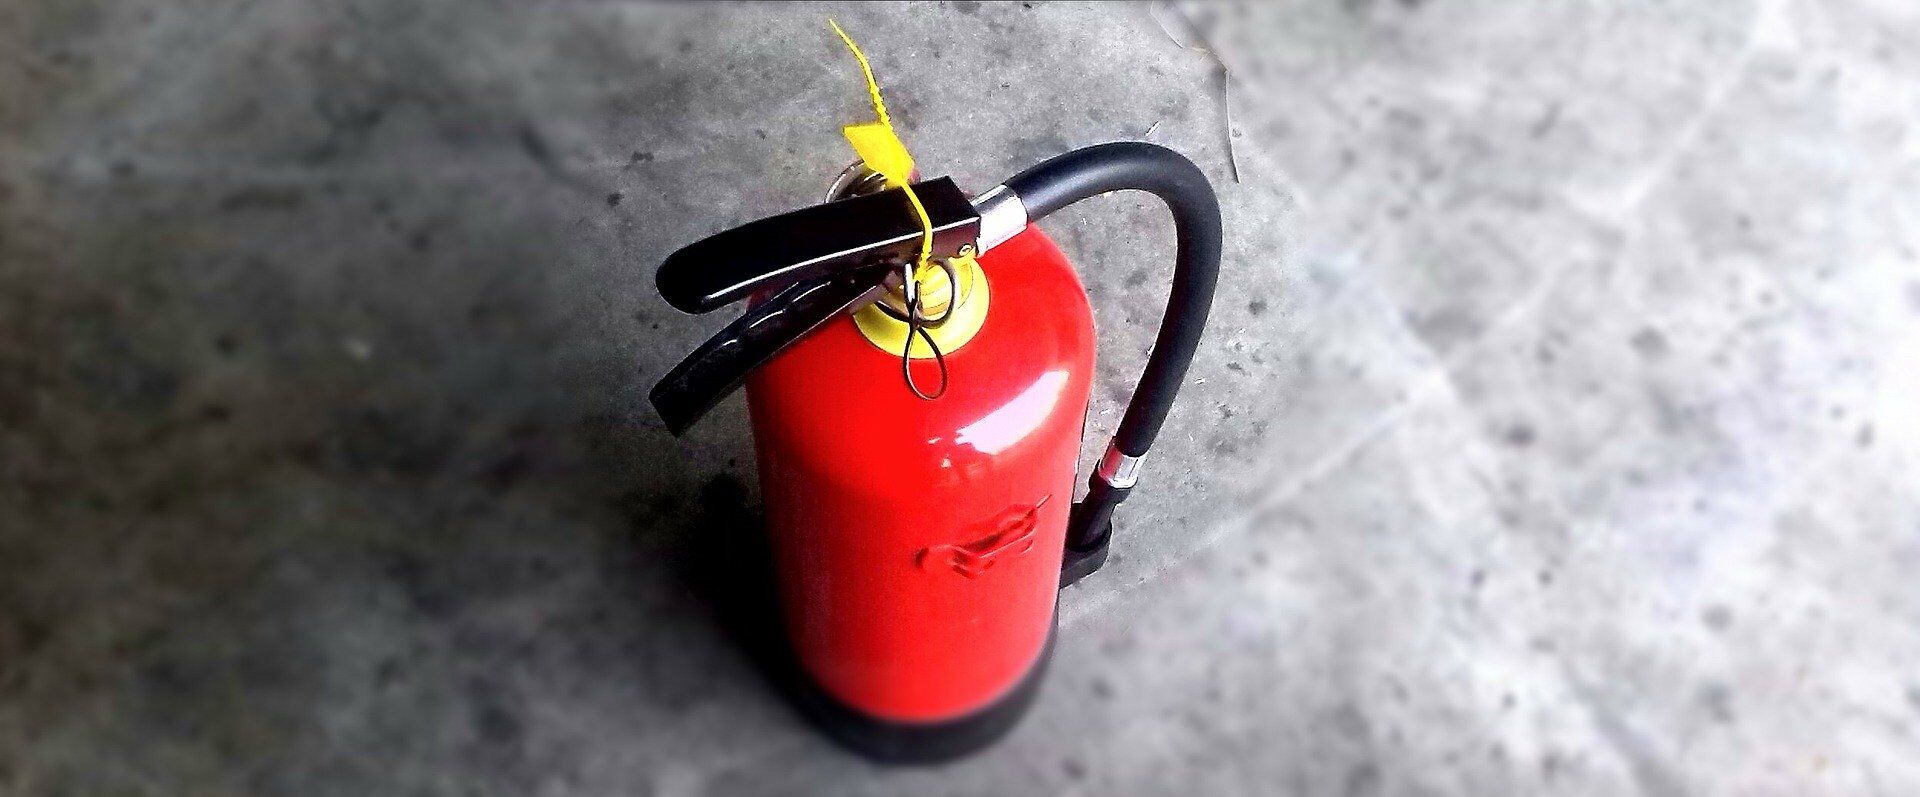 Basic fire safety awareness training